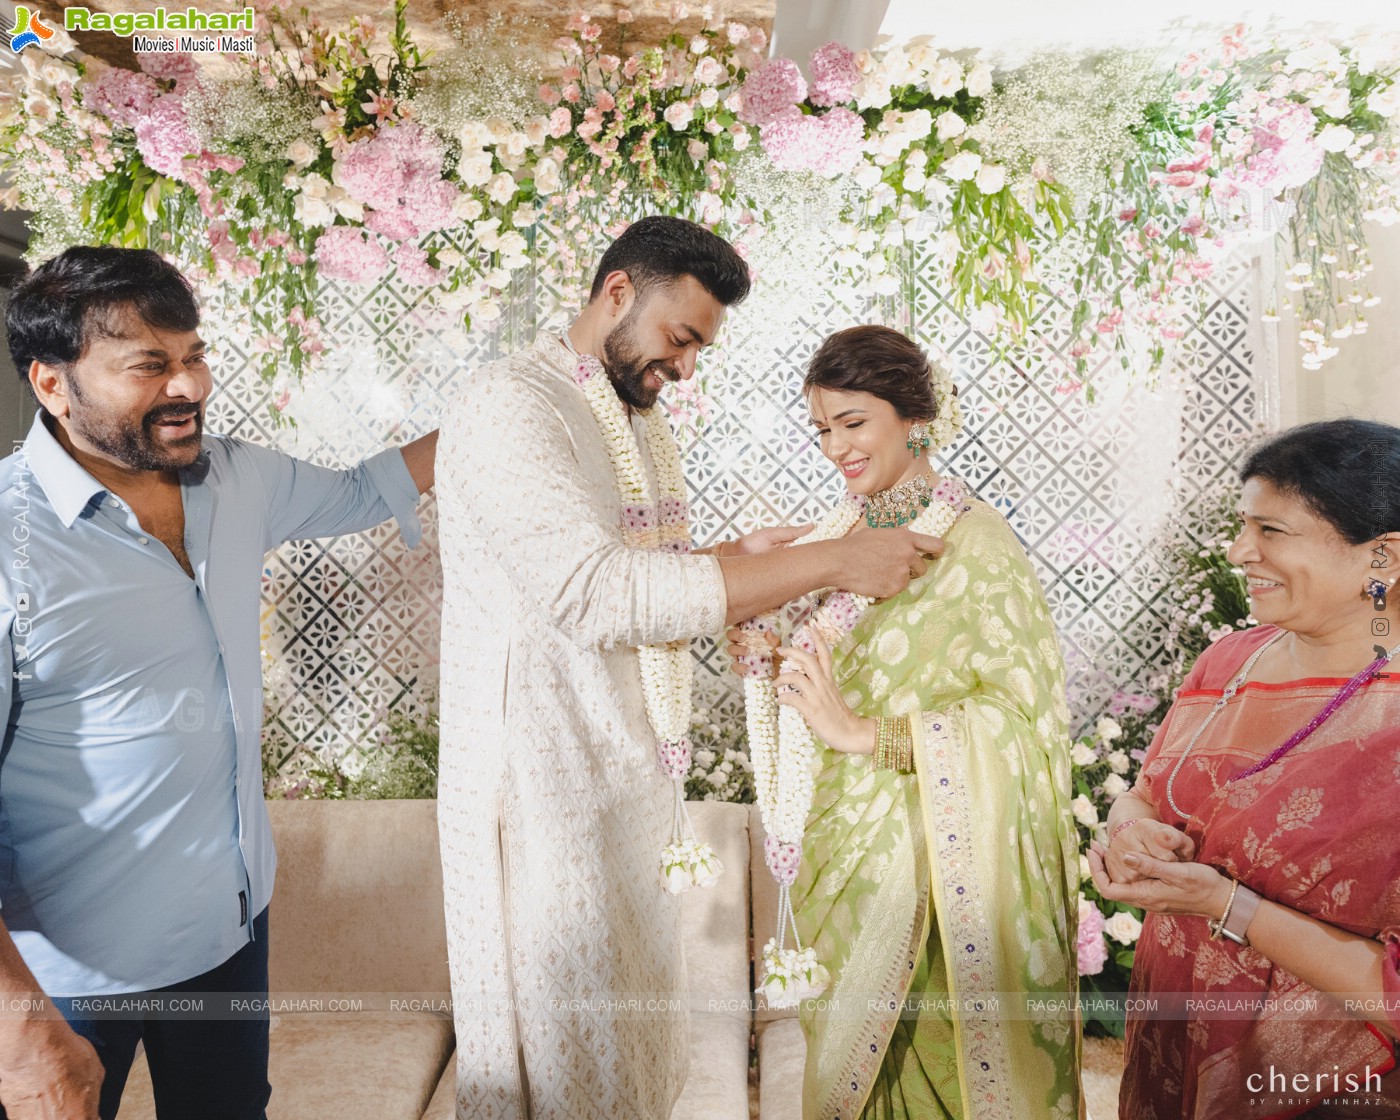 Varun Tej and Lavanya Tripathi's Engagement Pics